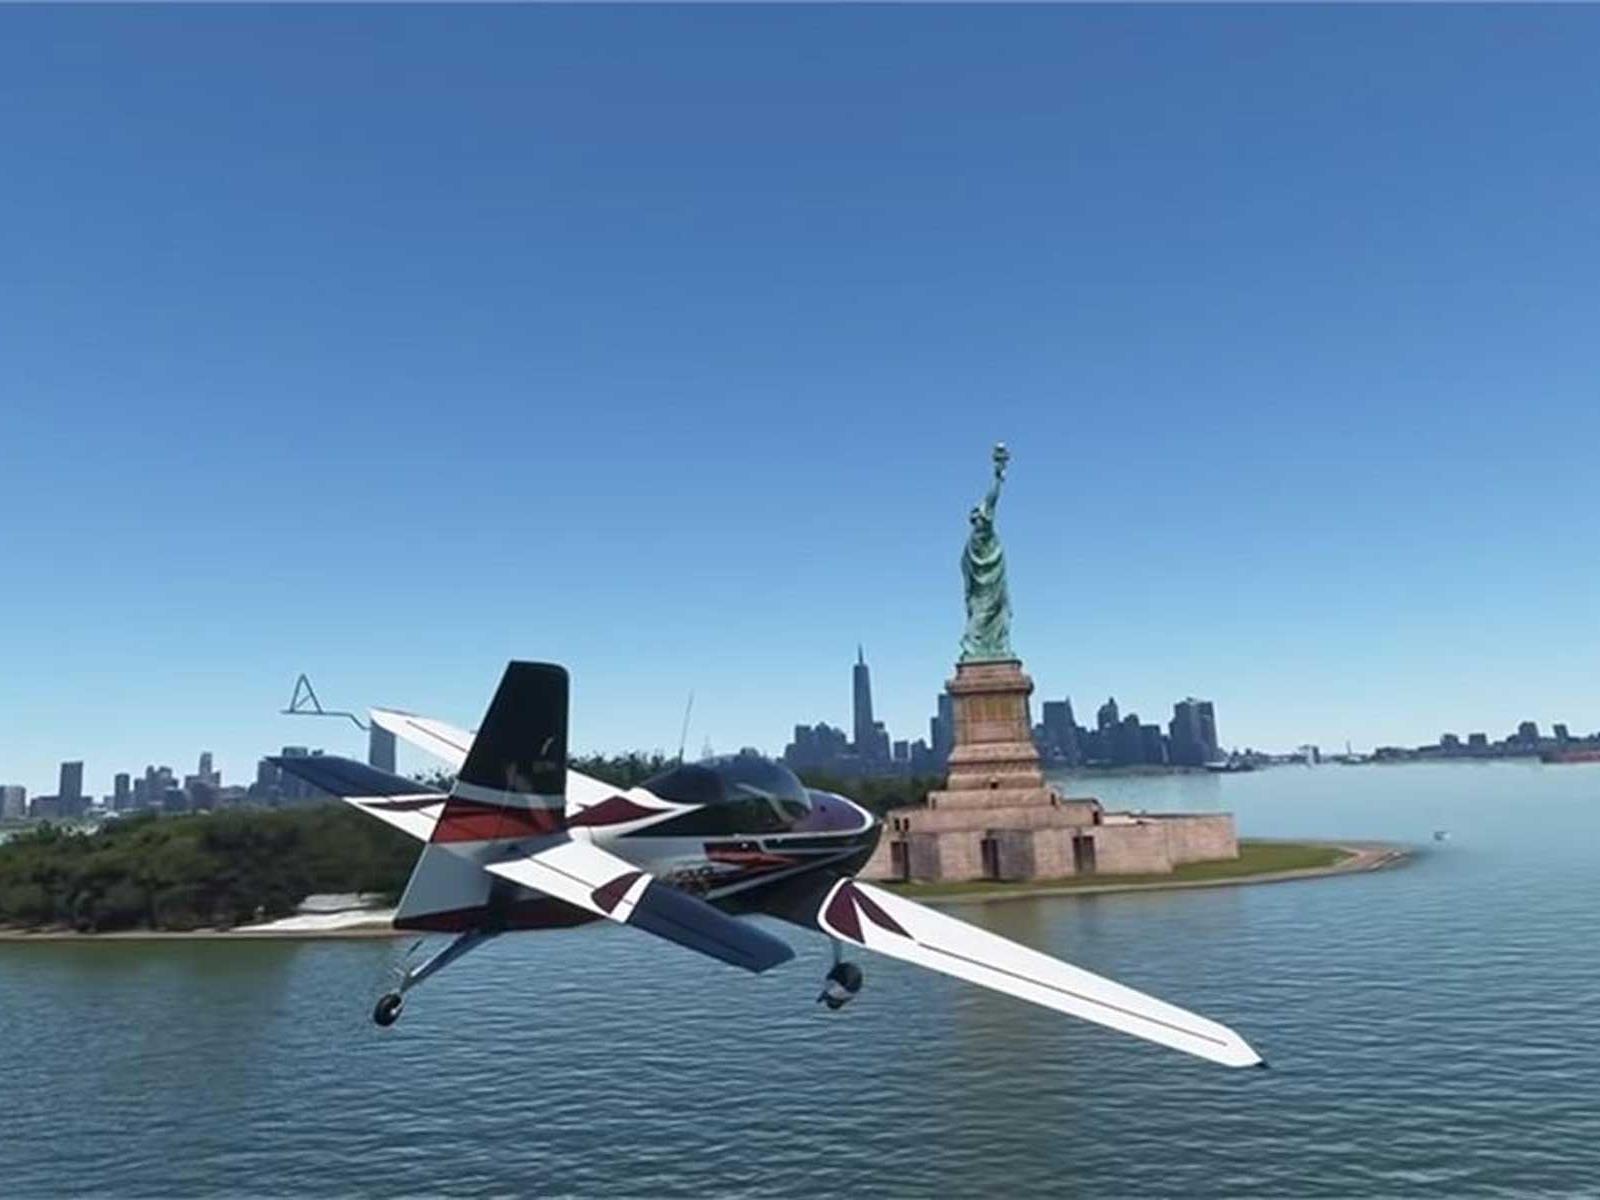 Flight Simulator 2020 planes list